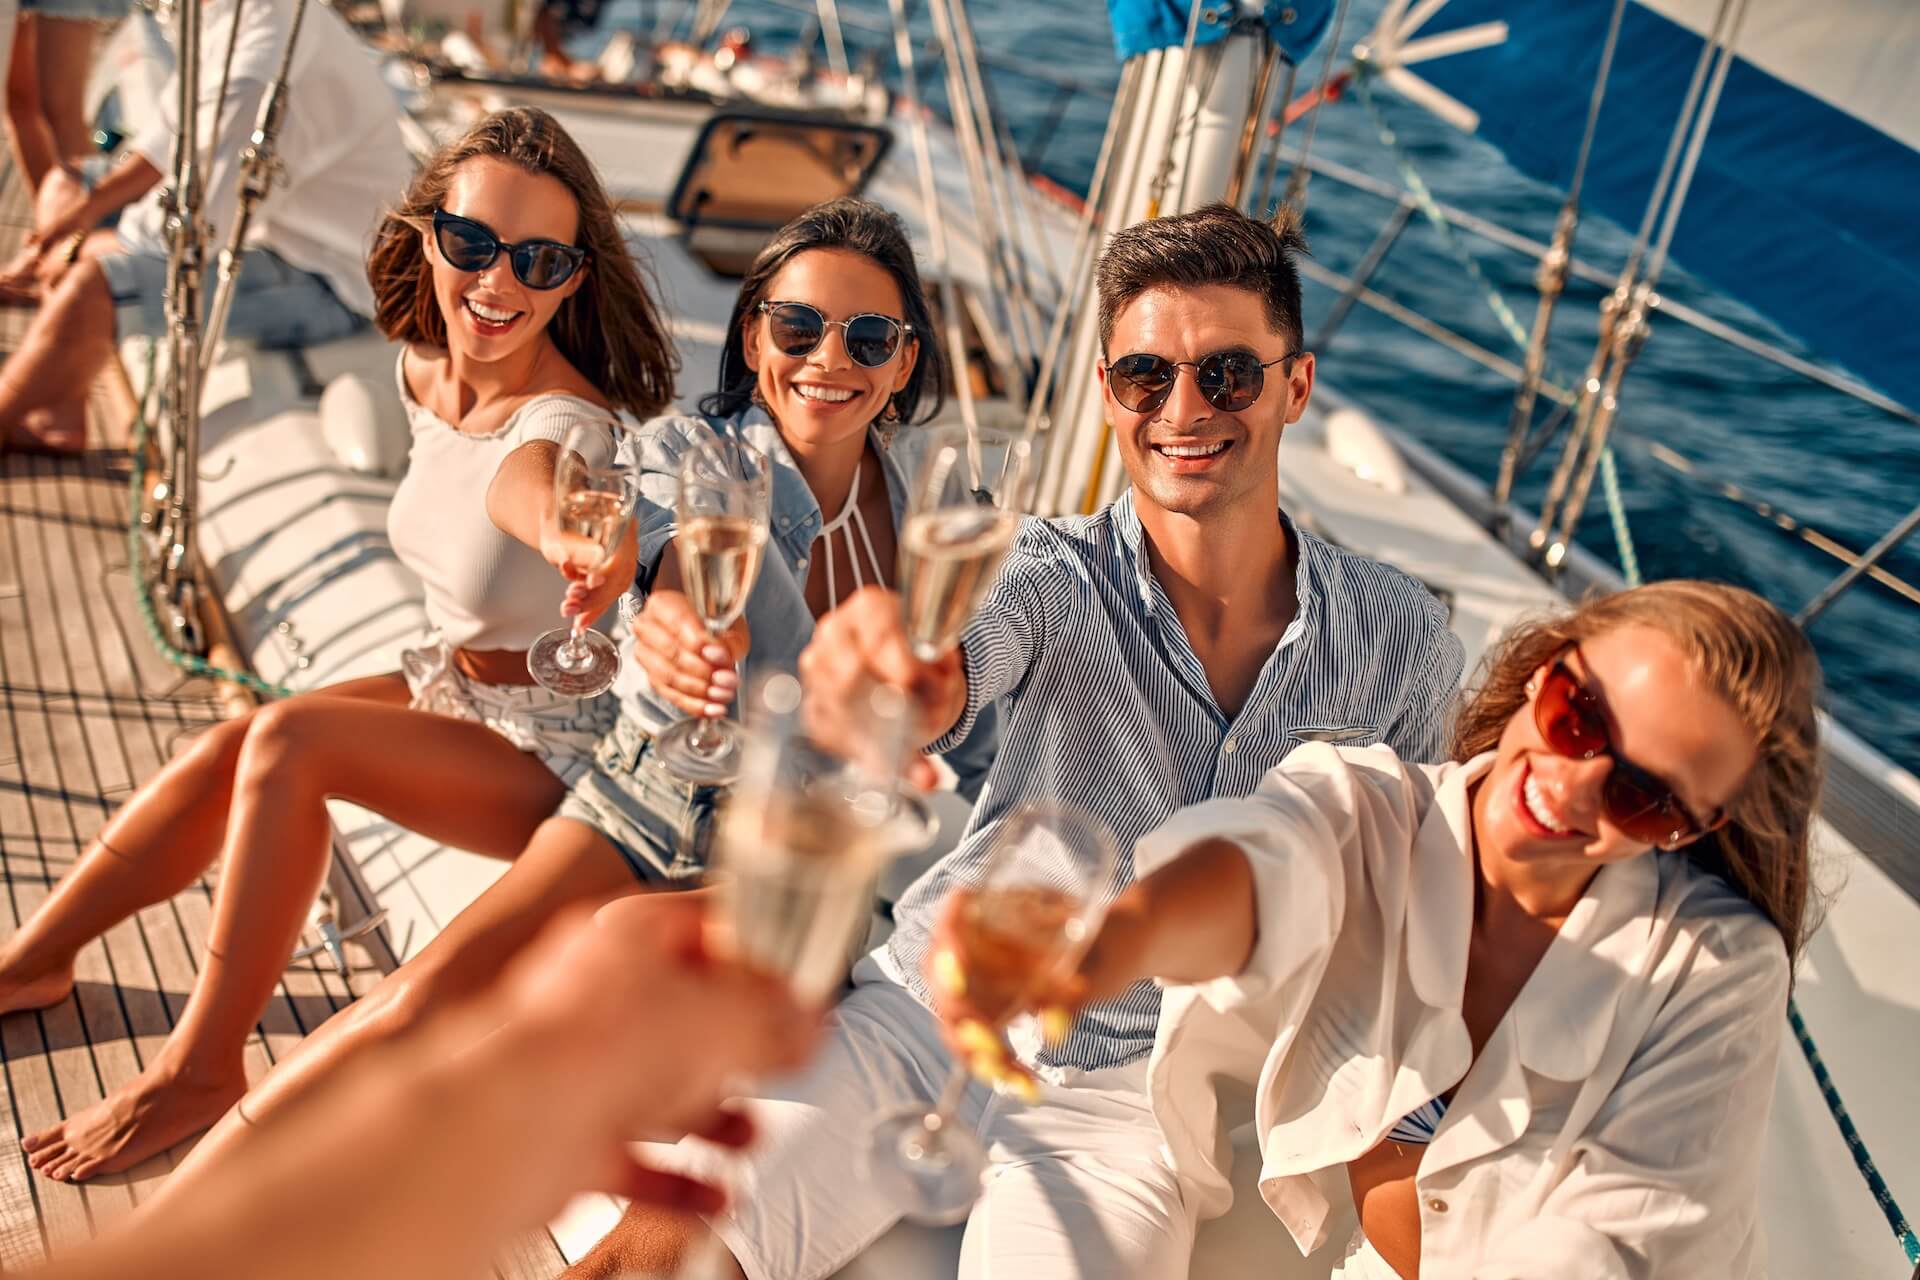 People enjoying drinks on a yacht